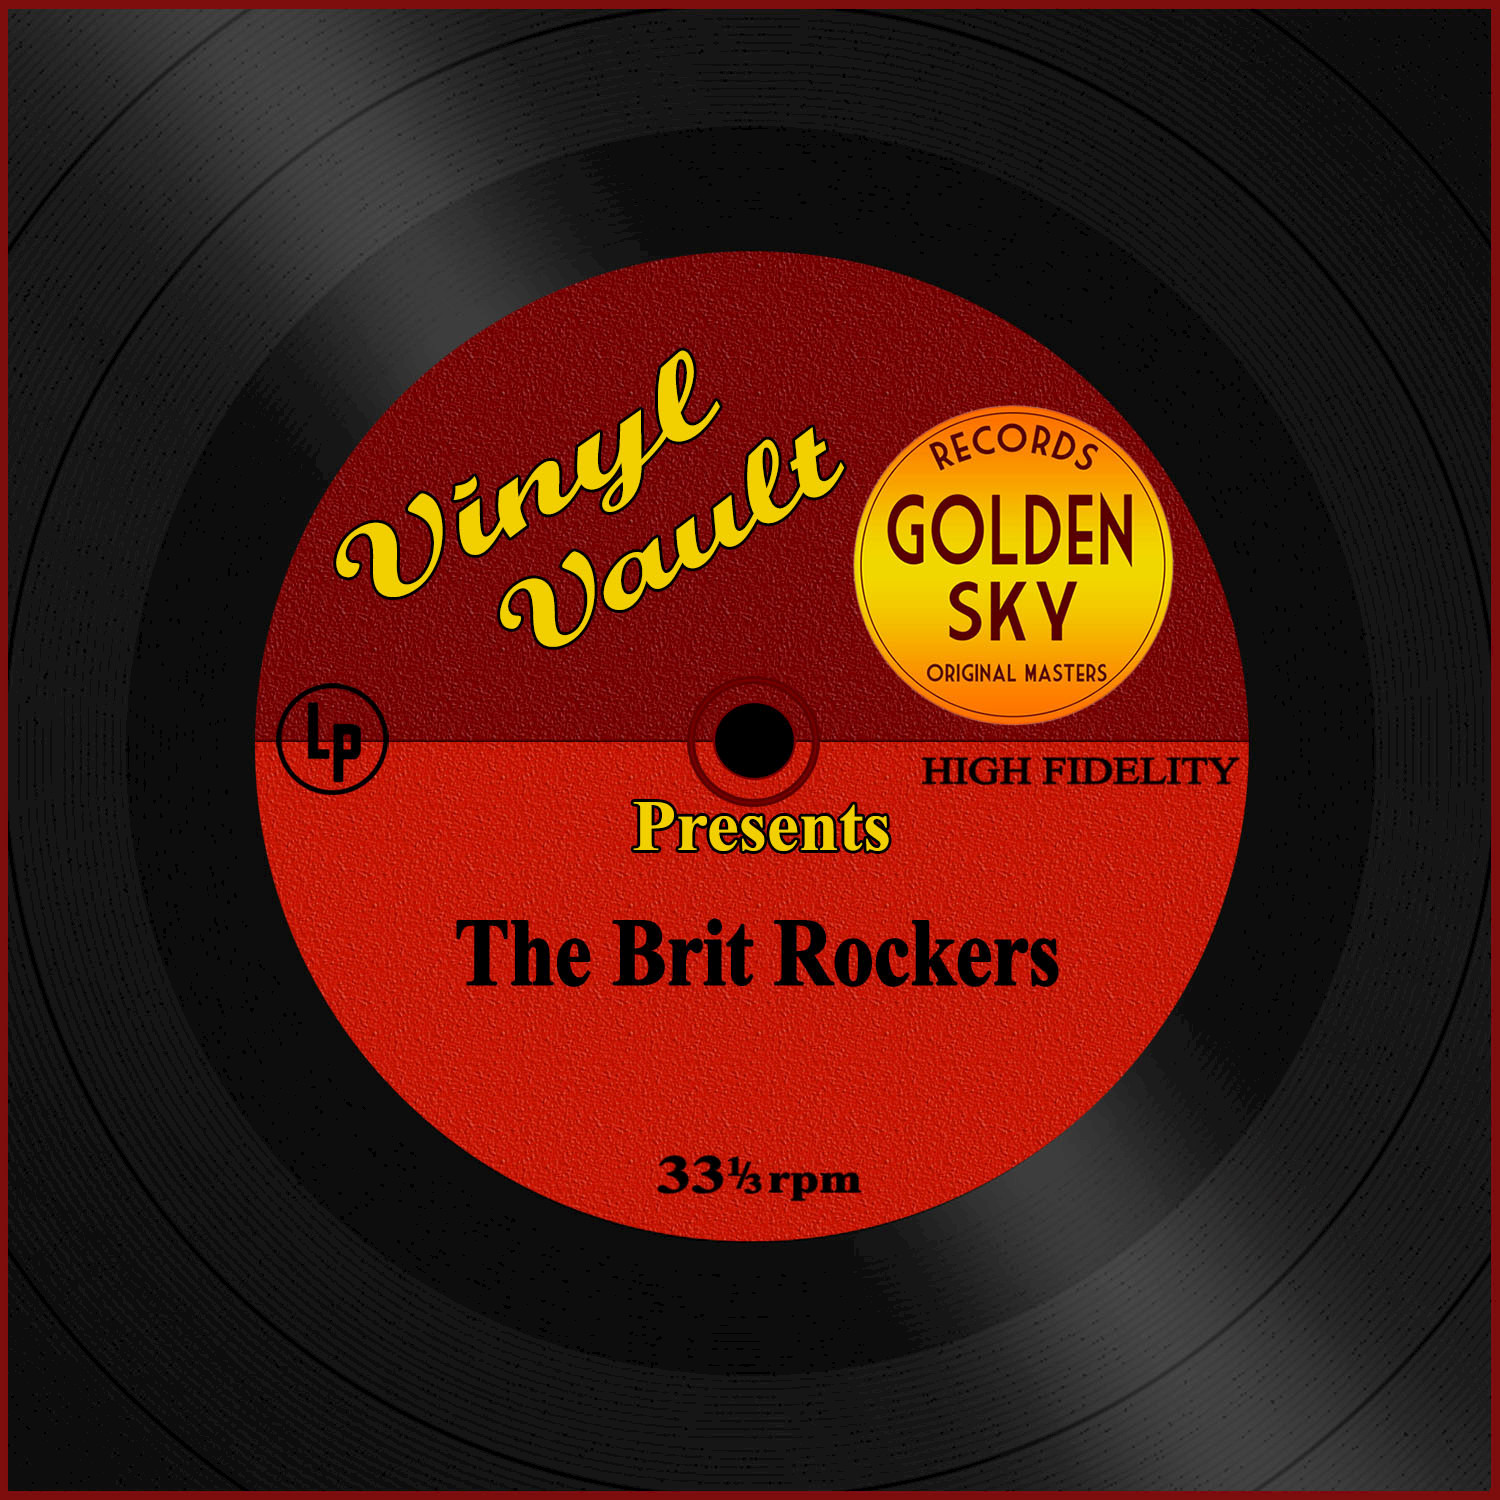 Vinyl Vault Presents the Brit Rockers